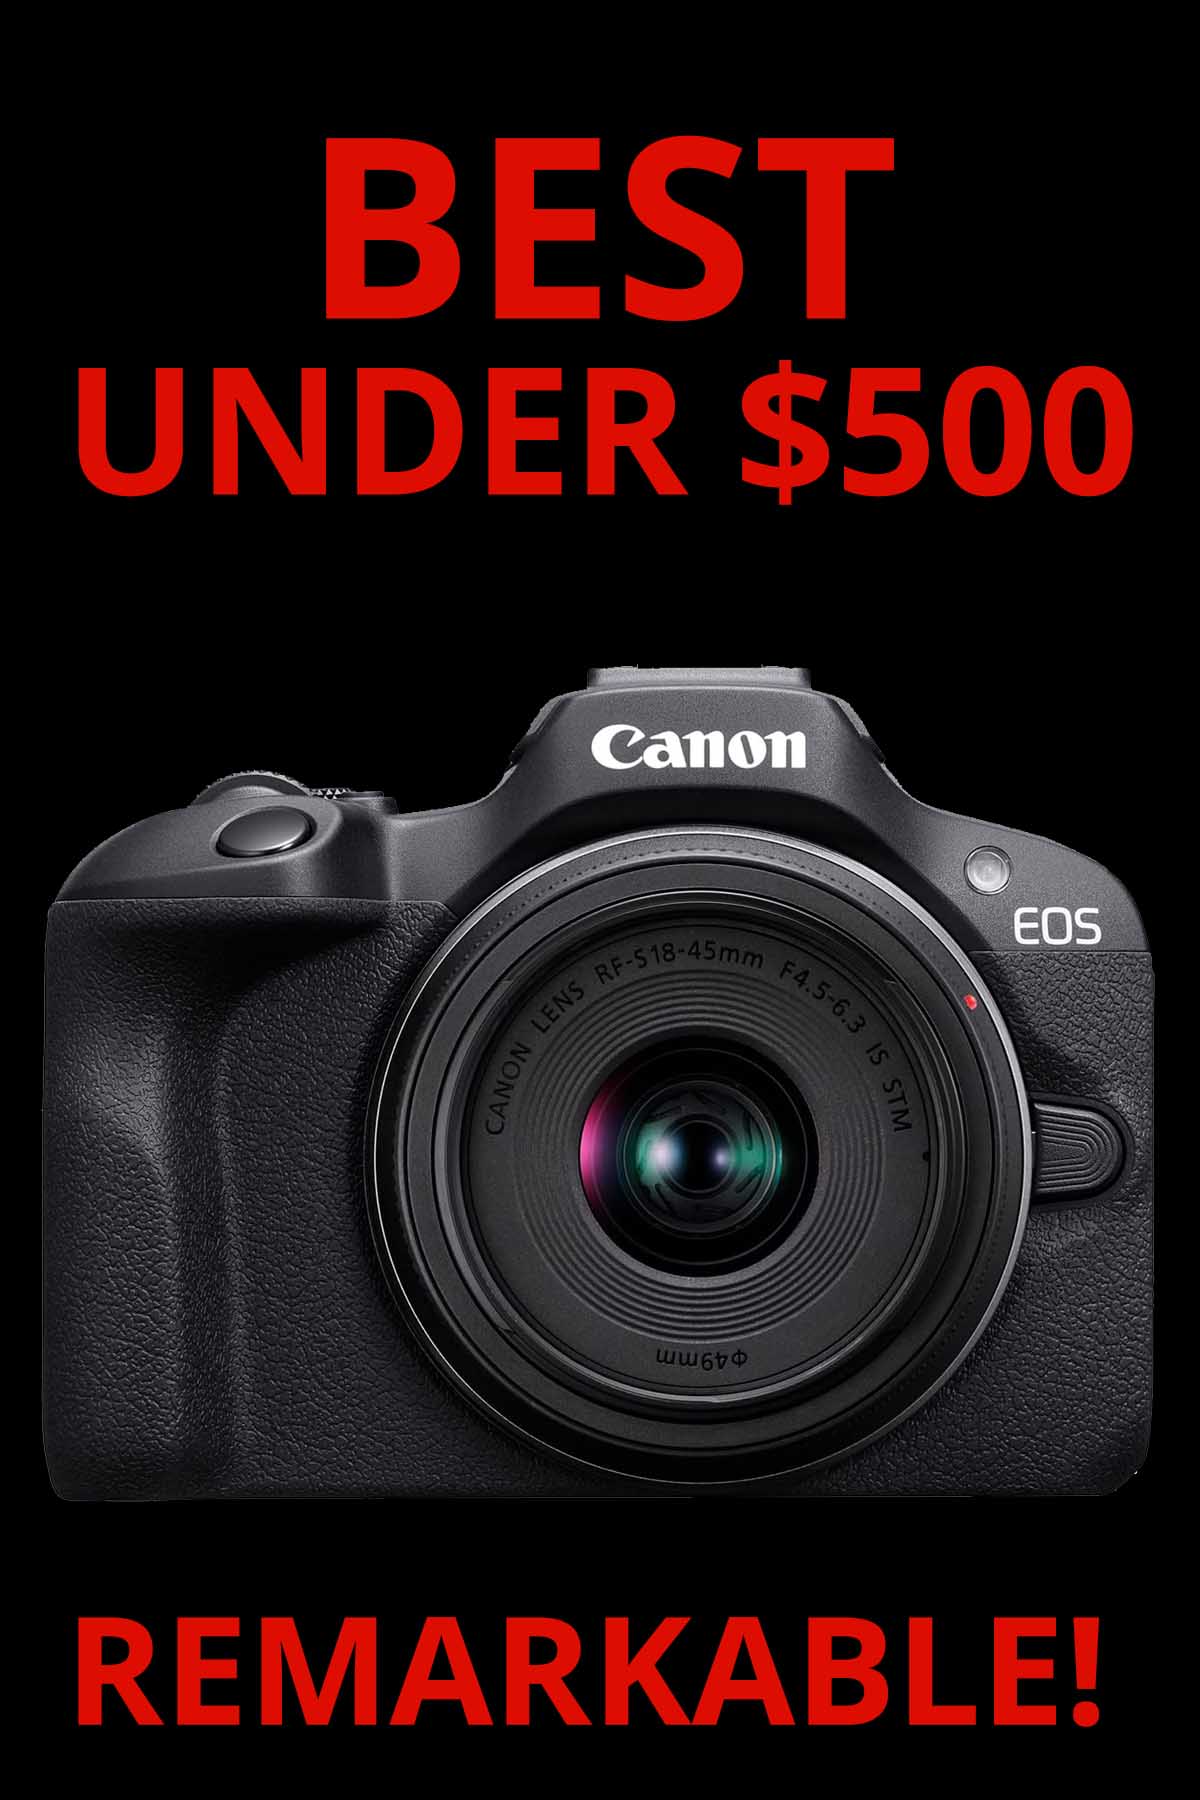 Best Canon camera under $500